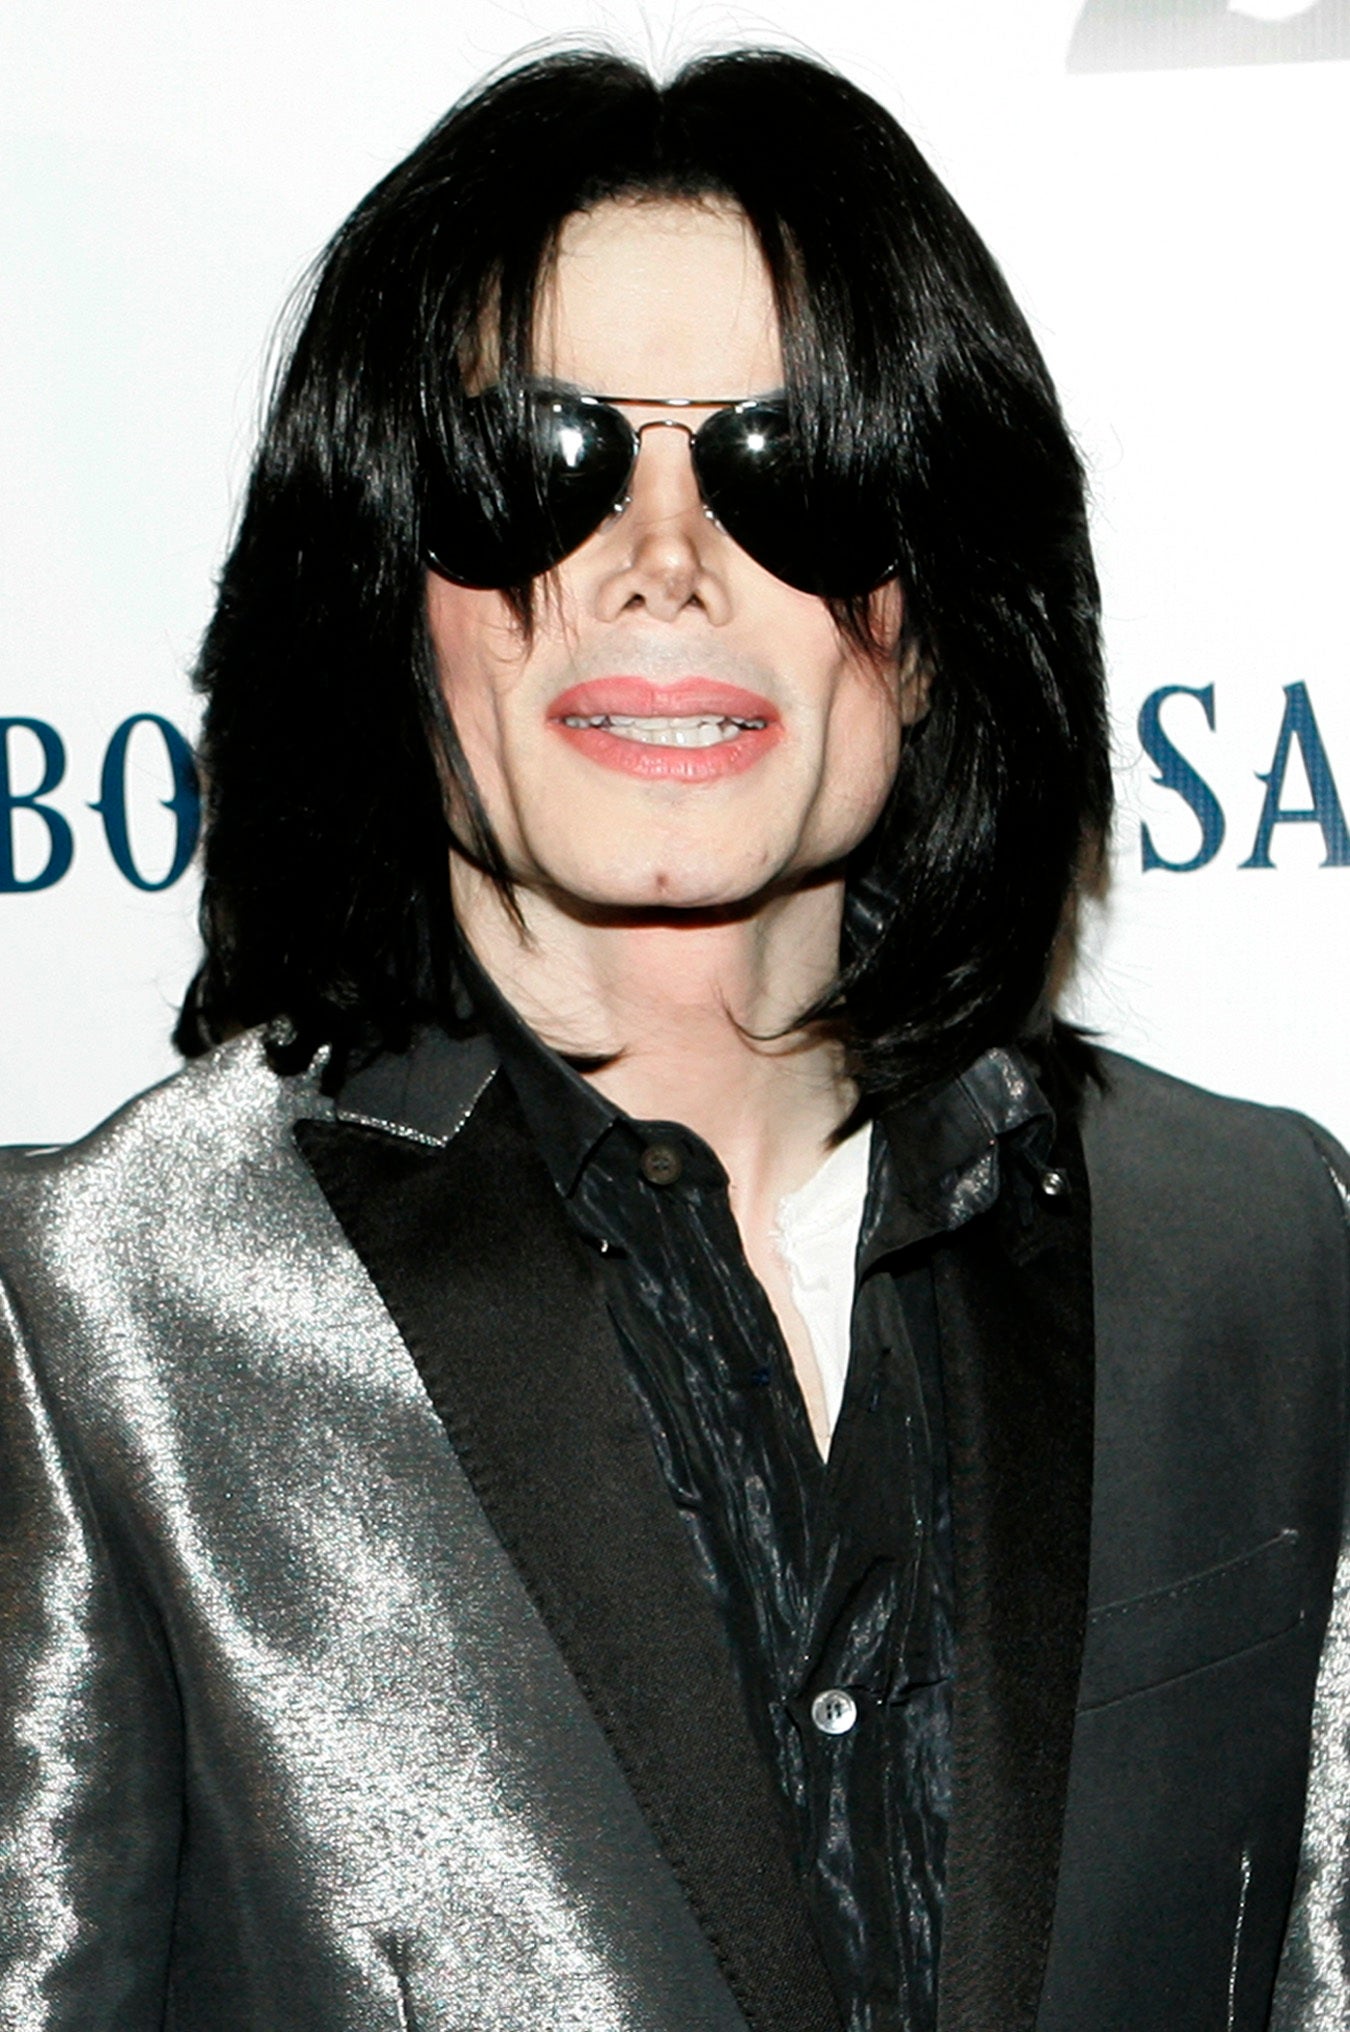 Michael Jackson - Black Or White, Releases